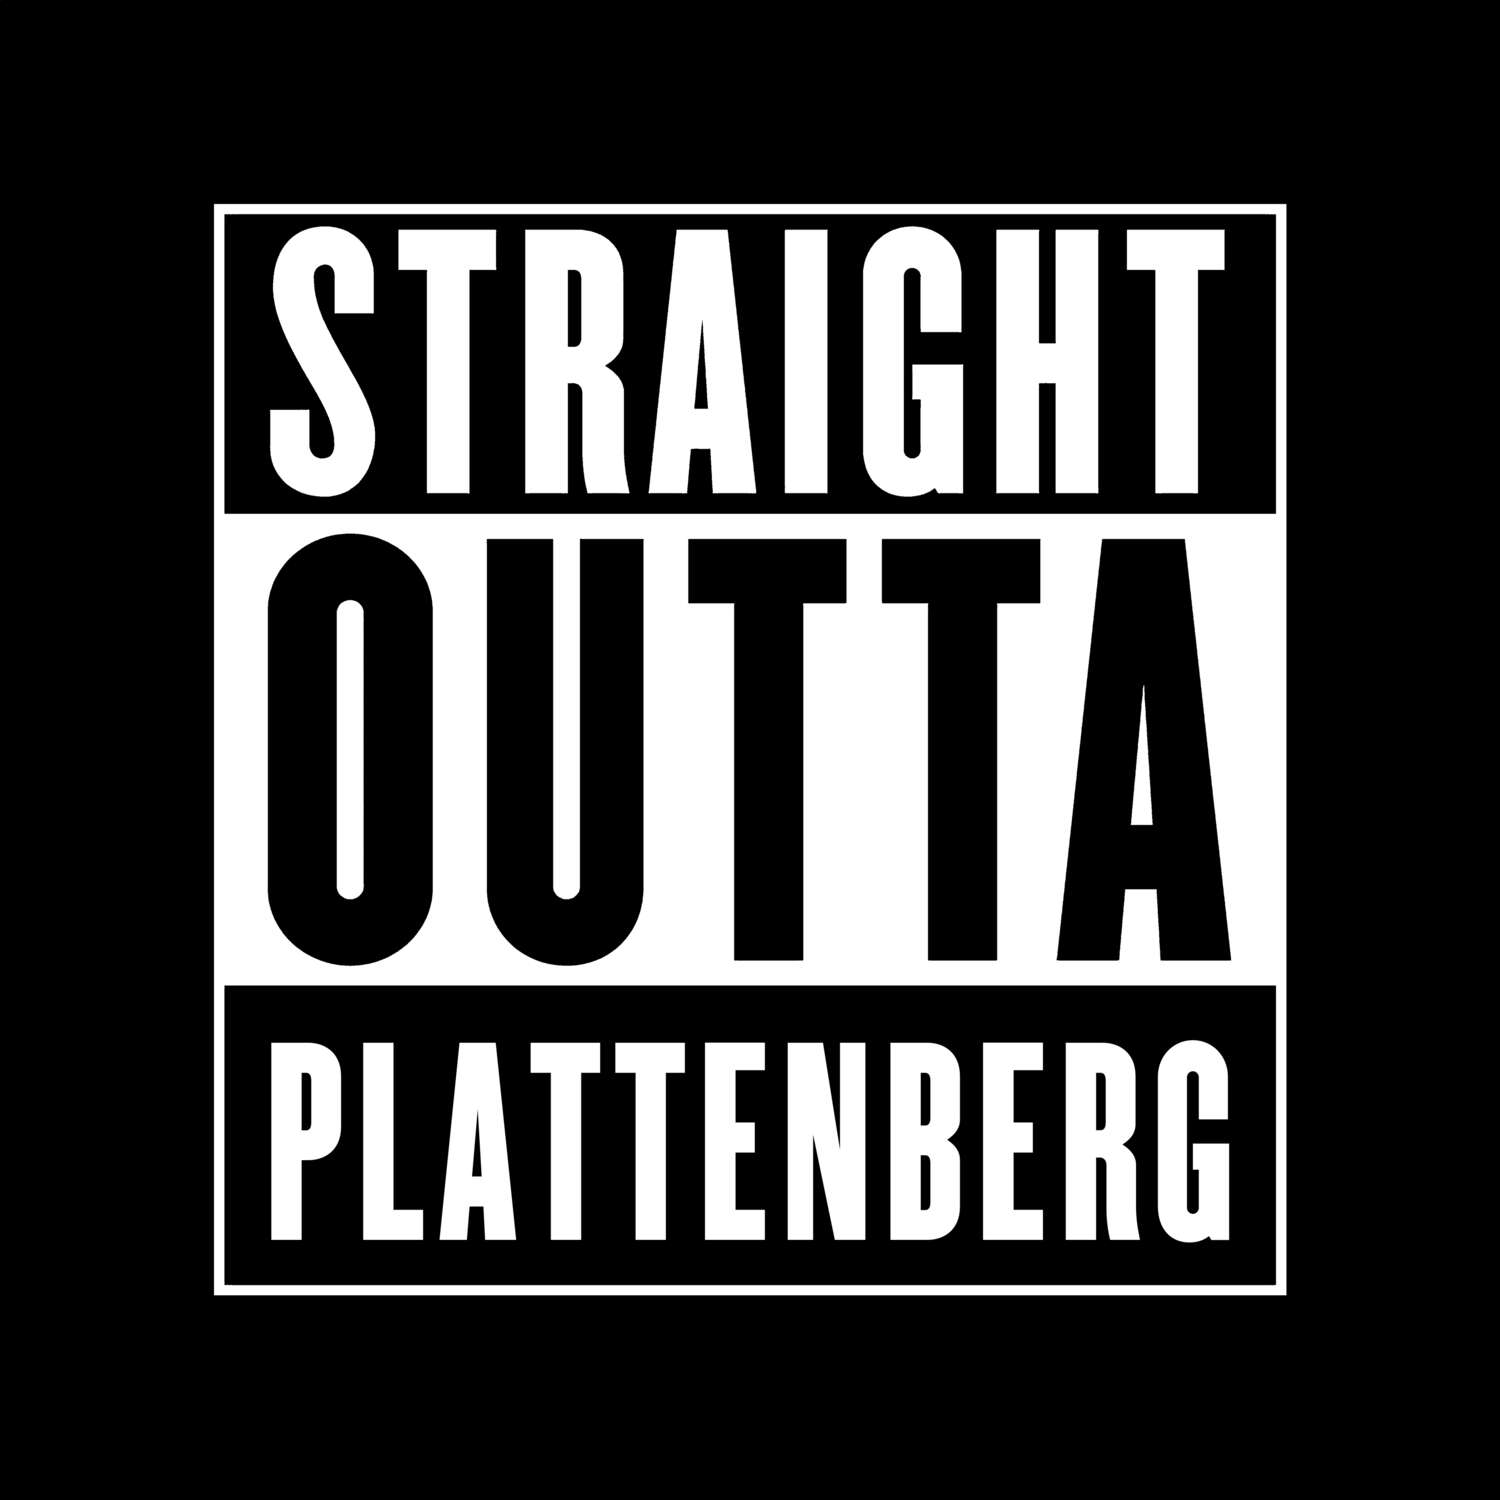 Plattenberg T-Shirt »Straight Outta«